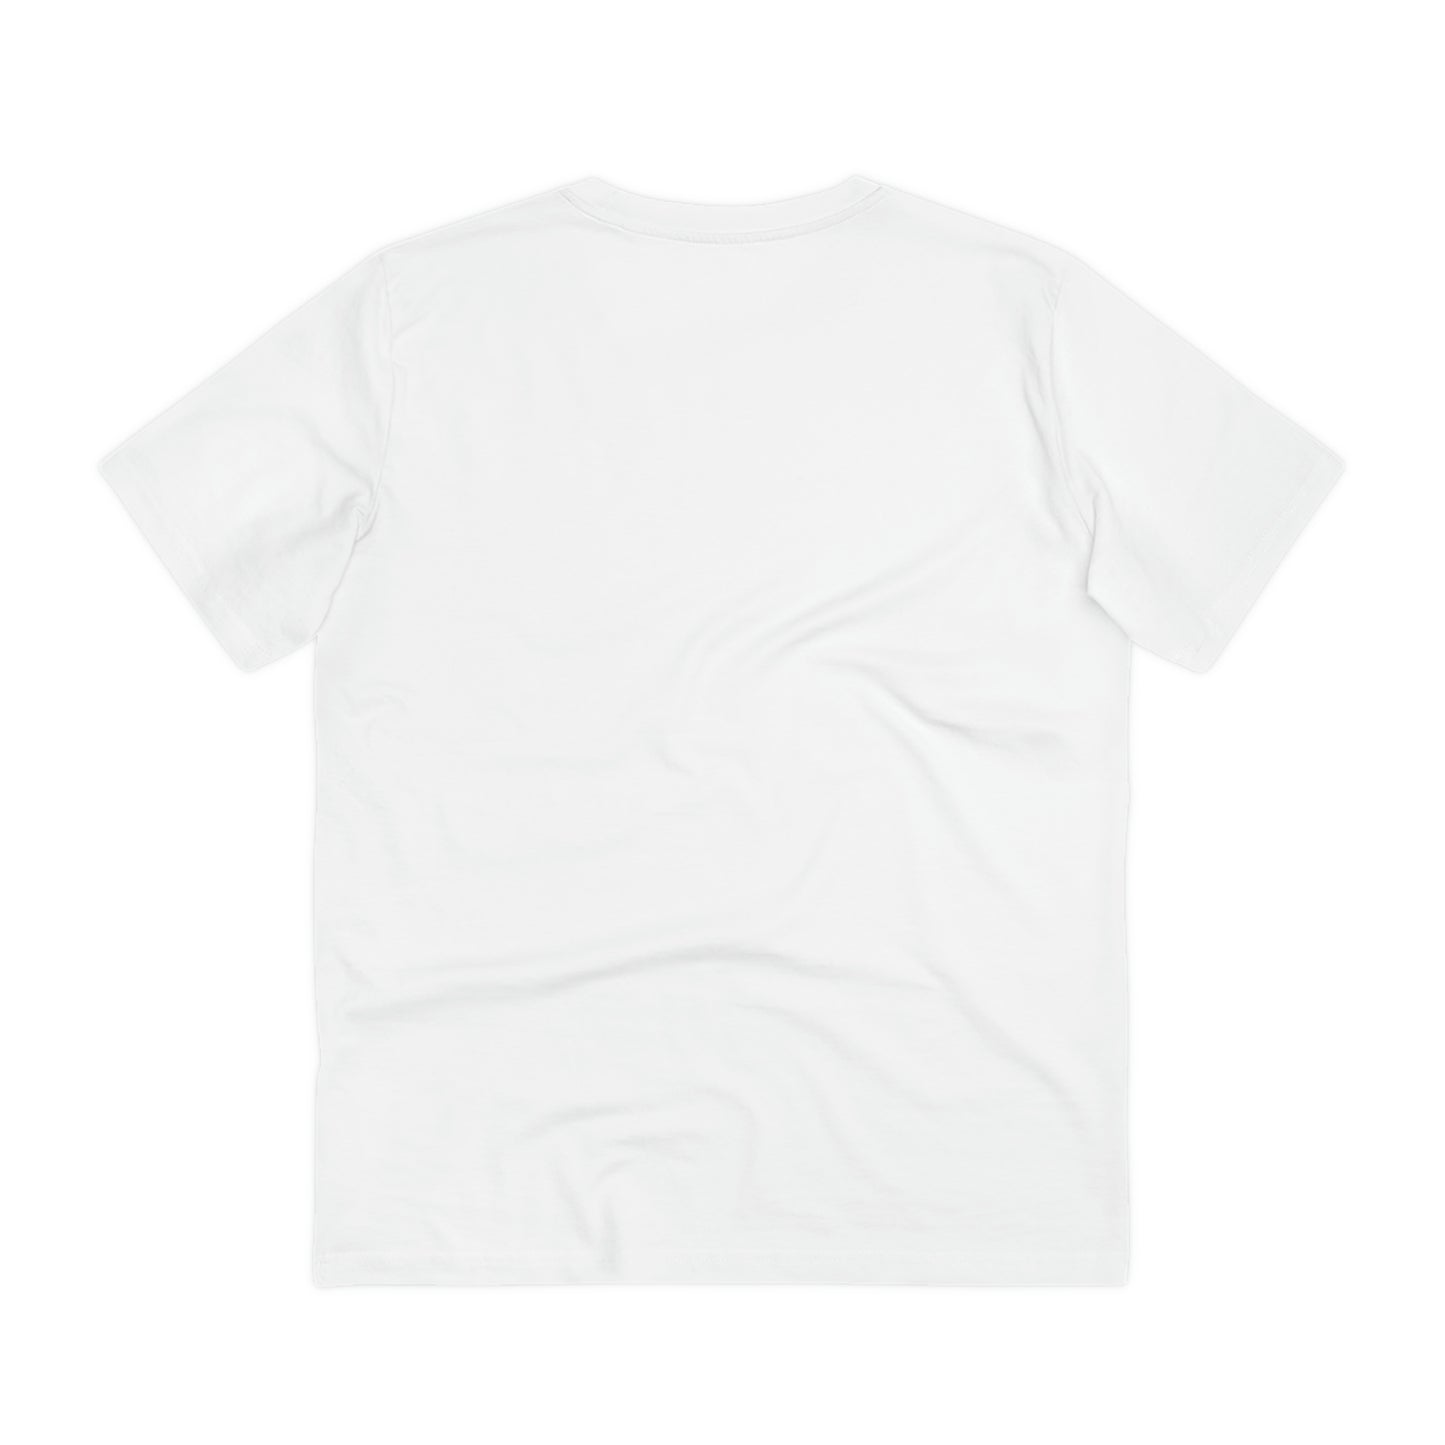 Tribute T-shirt - Unisex